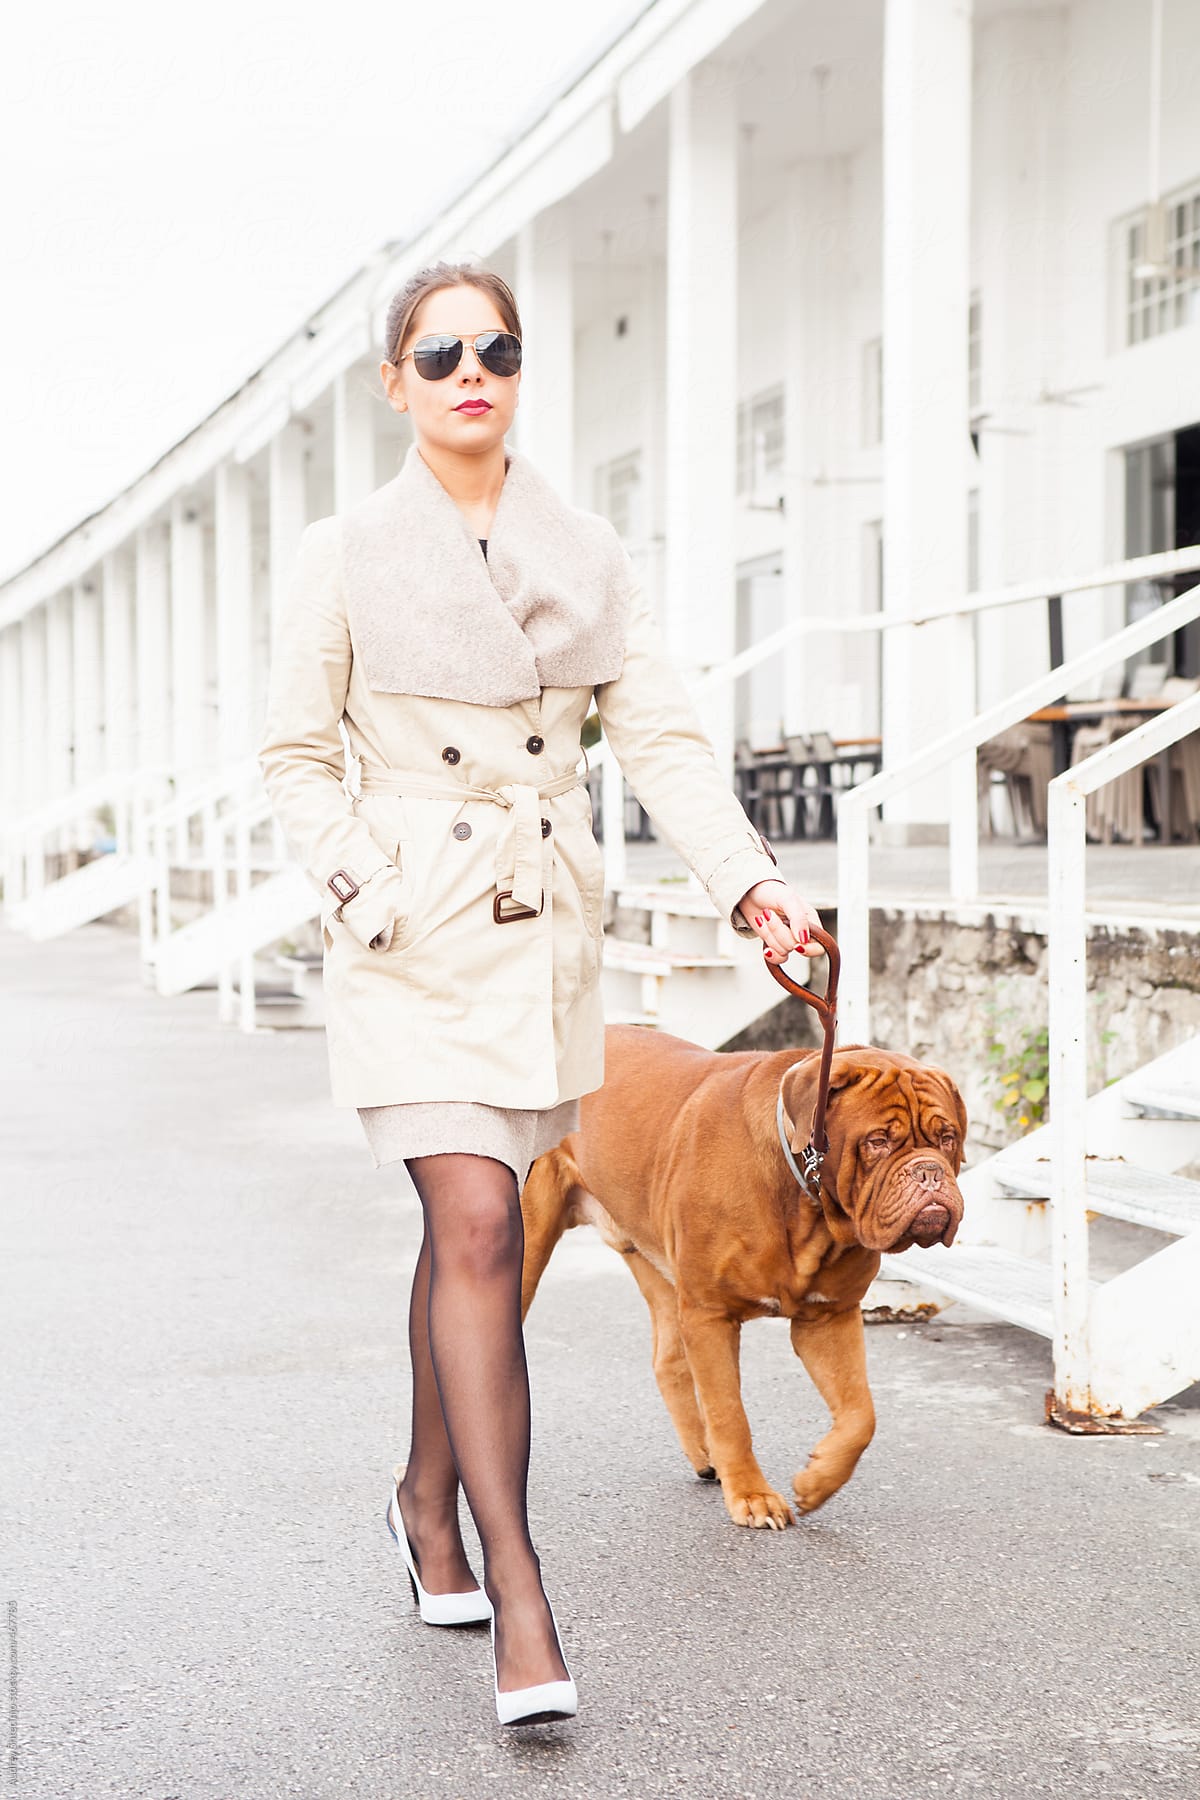 Fashionable woman walking with her Dogue de Bordeaux